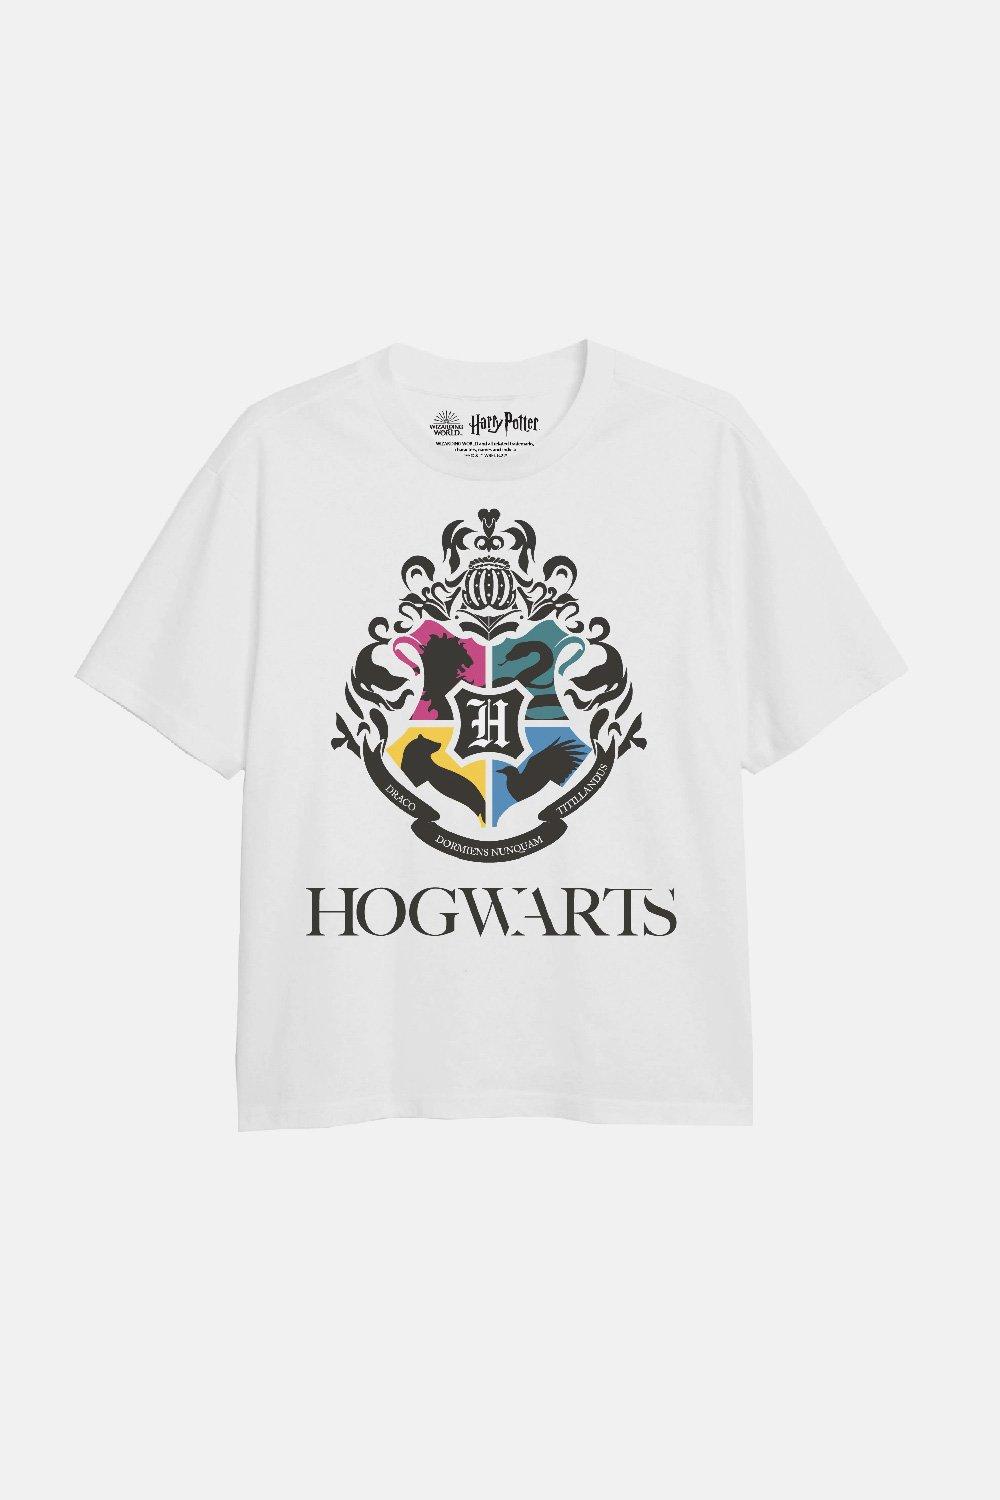 Hogwarts Houses Girls T-Shirt